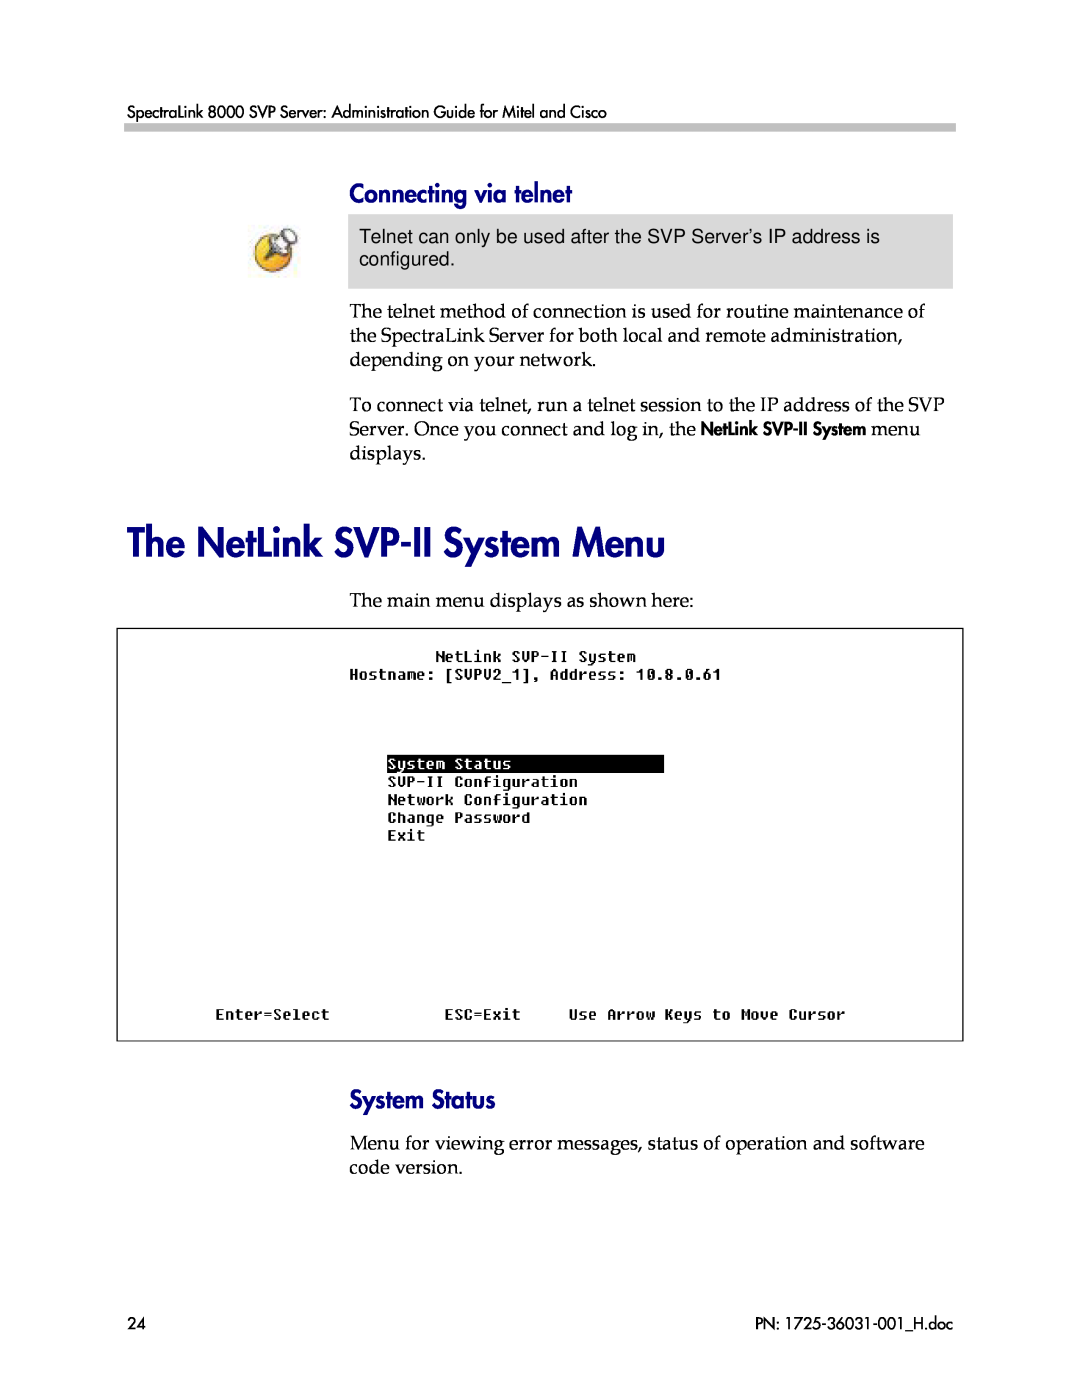 Polycom VP010, 1725-36031-001 manual The NetLink SVP-II System Menu, Connecting via telnet, System Status 